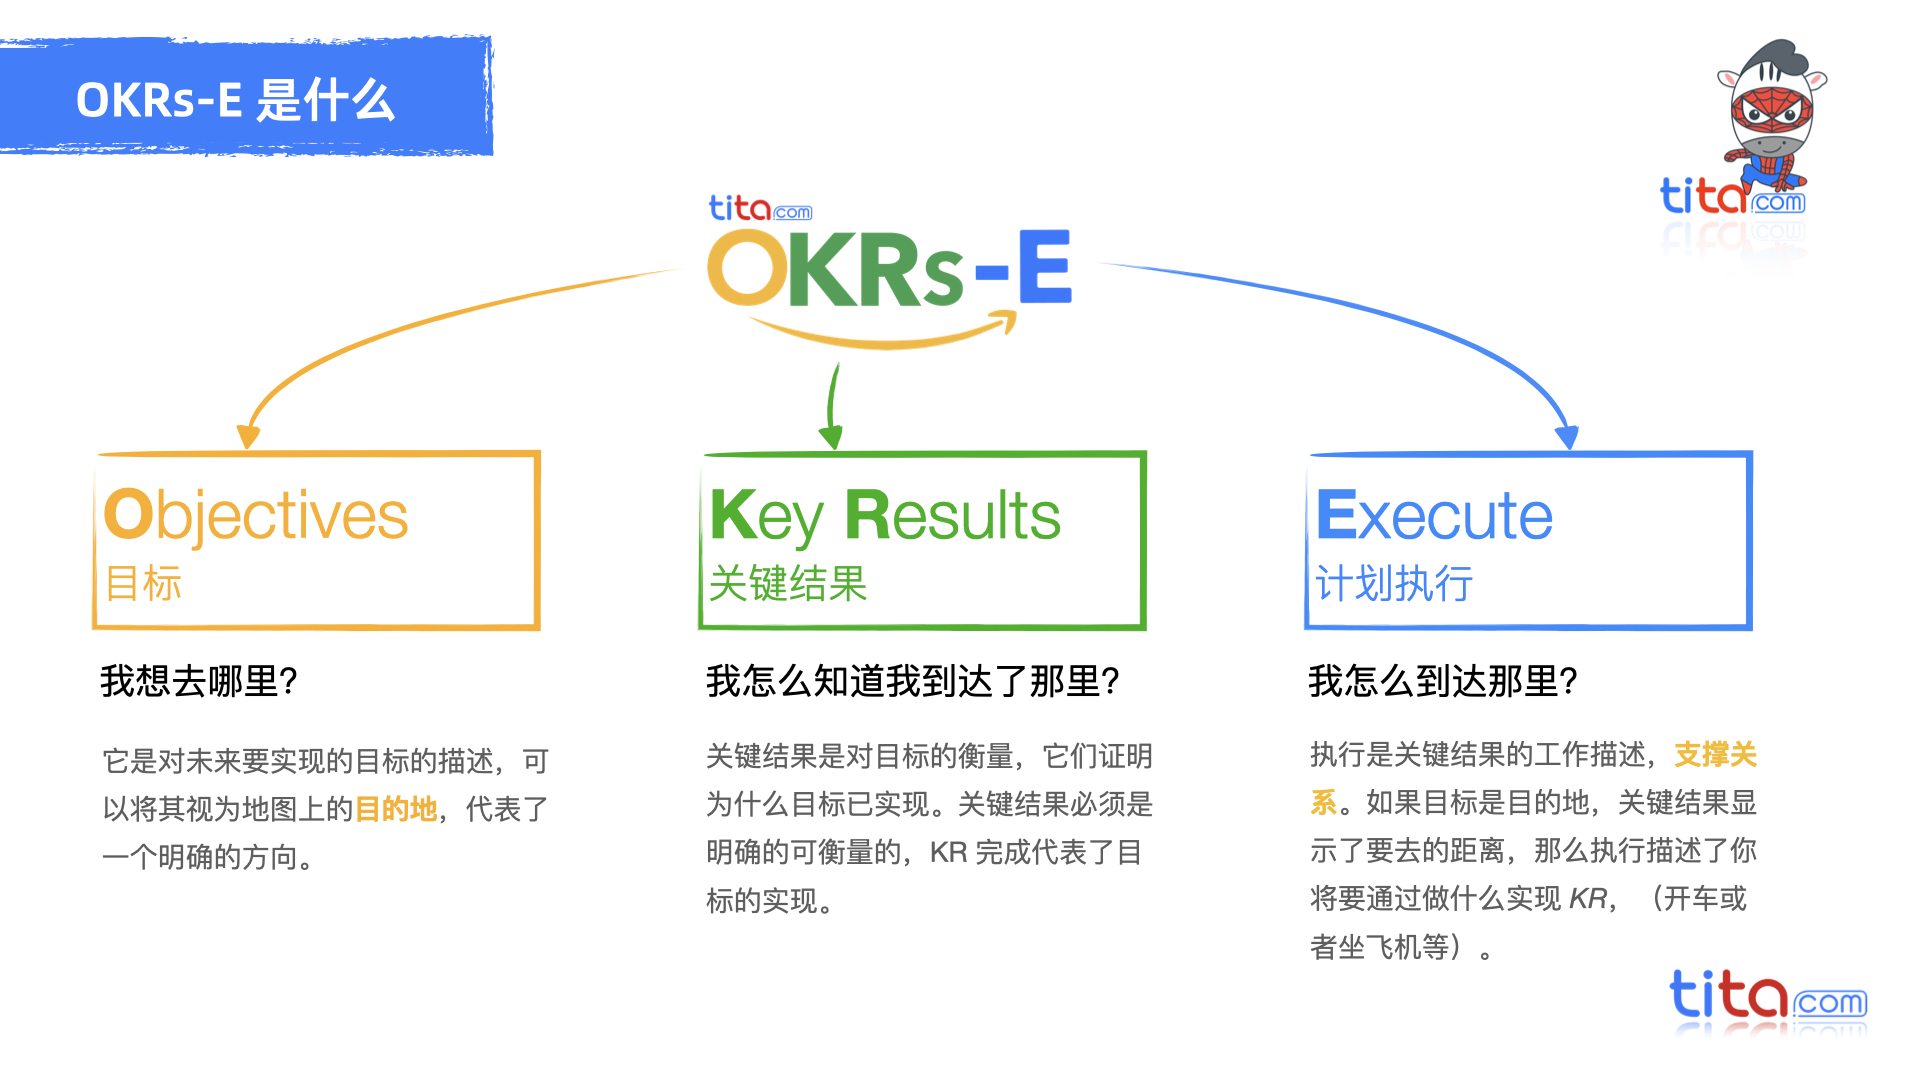 OKR vs. KPI 一次搞清楚这两大概念！